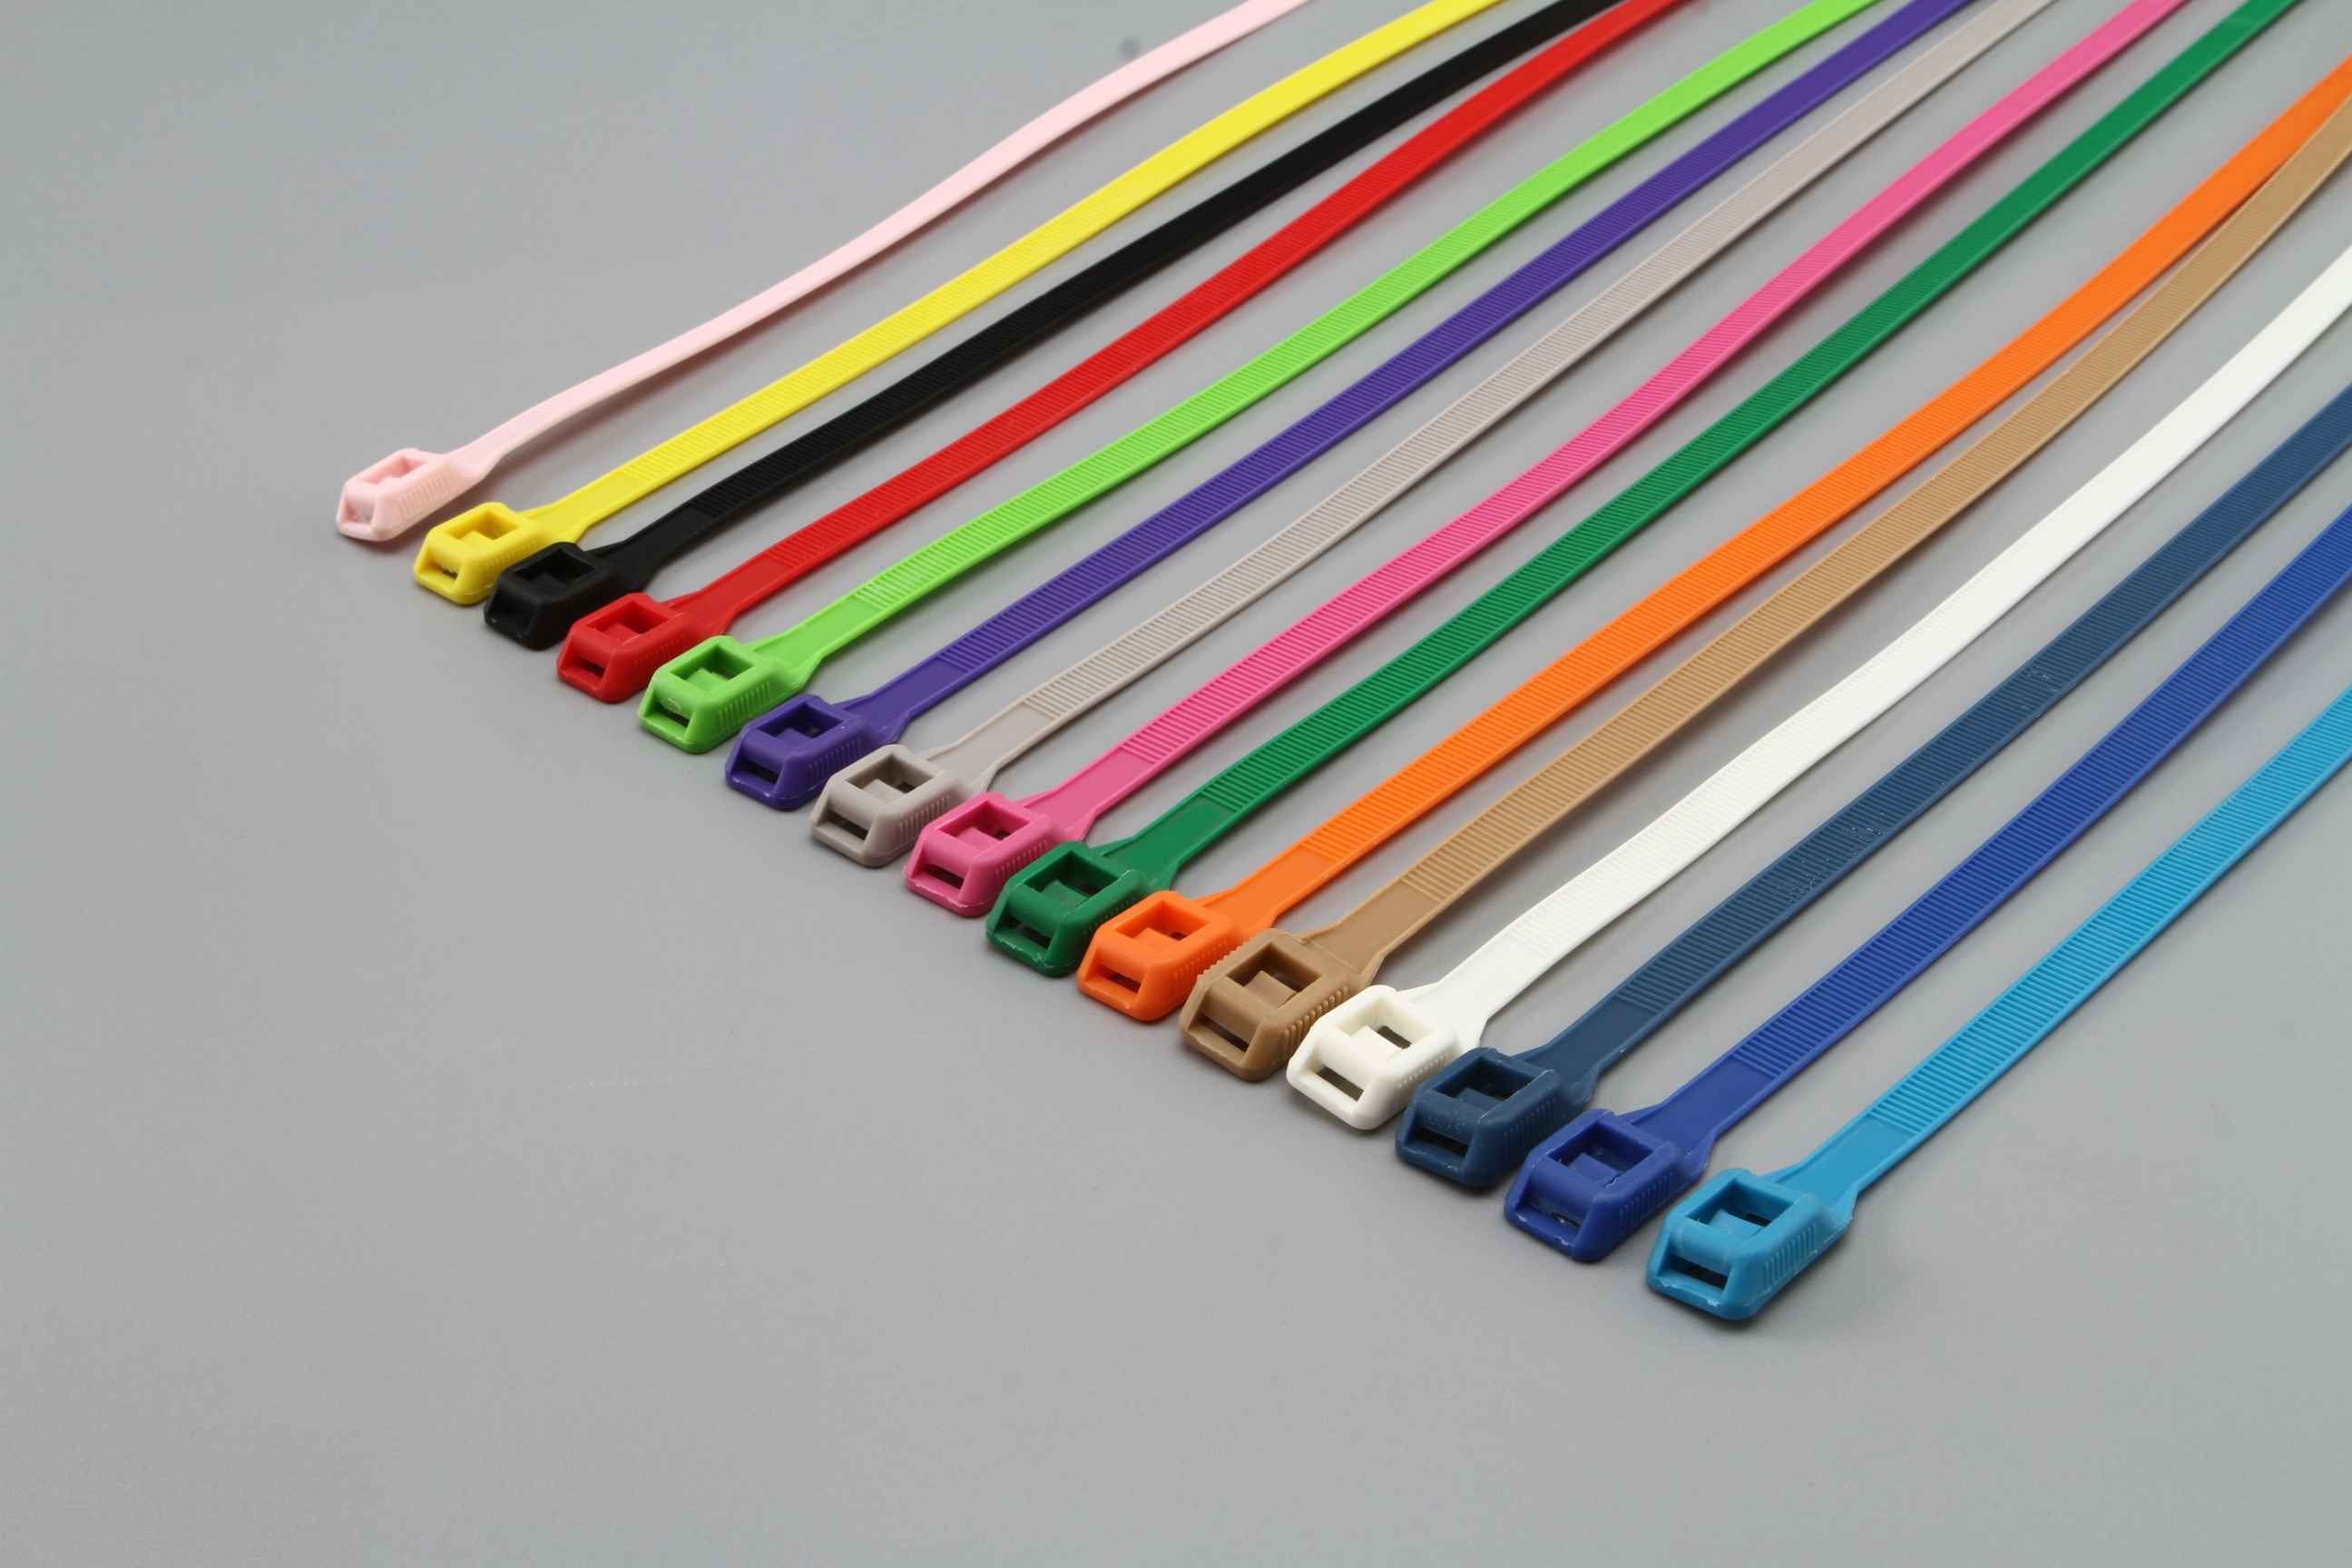 Loose adjustable buckle cable ties - 2 